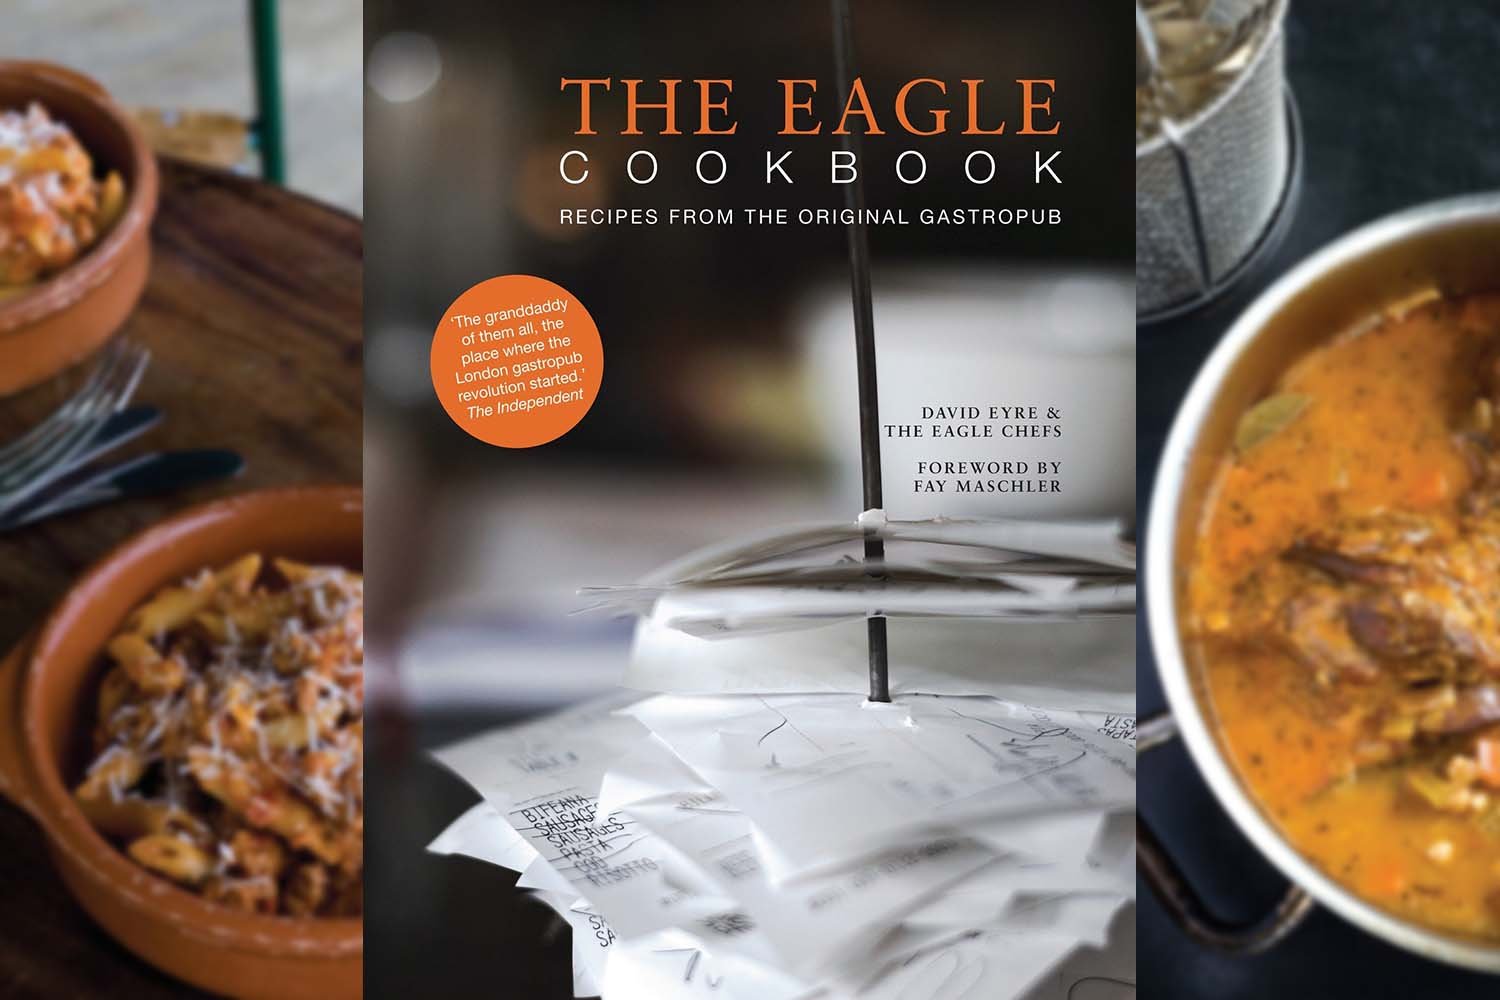 Behind The Cookbook: The Eagle Cookbook